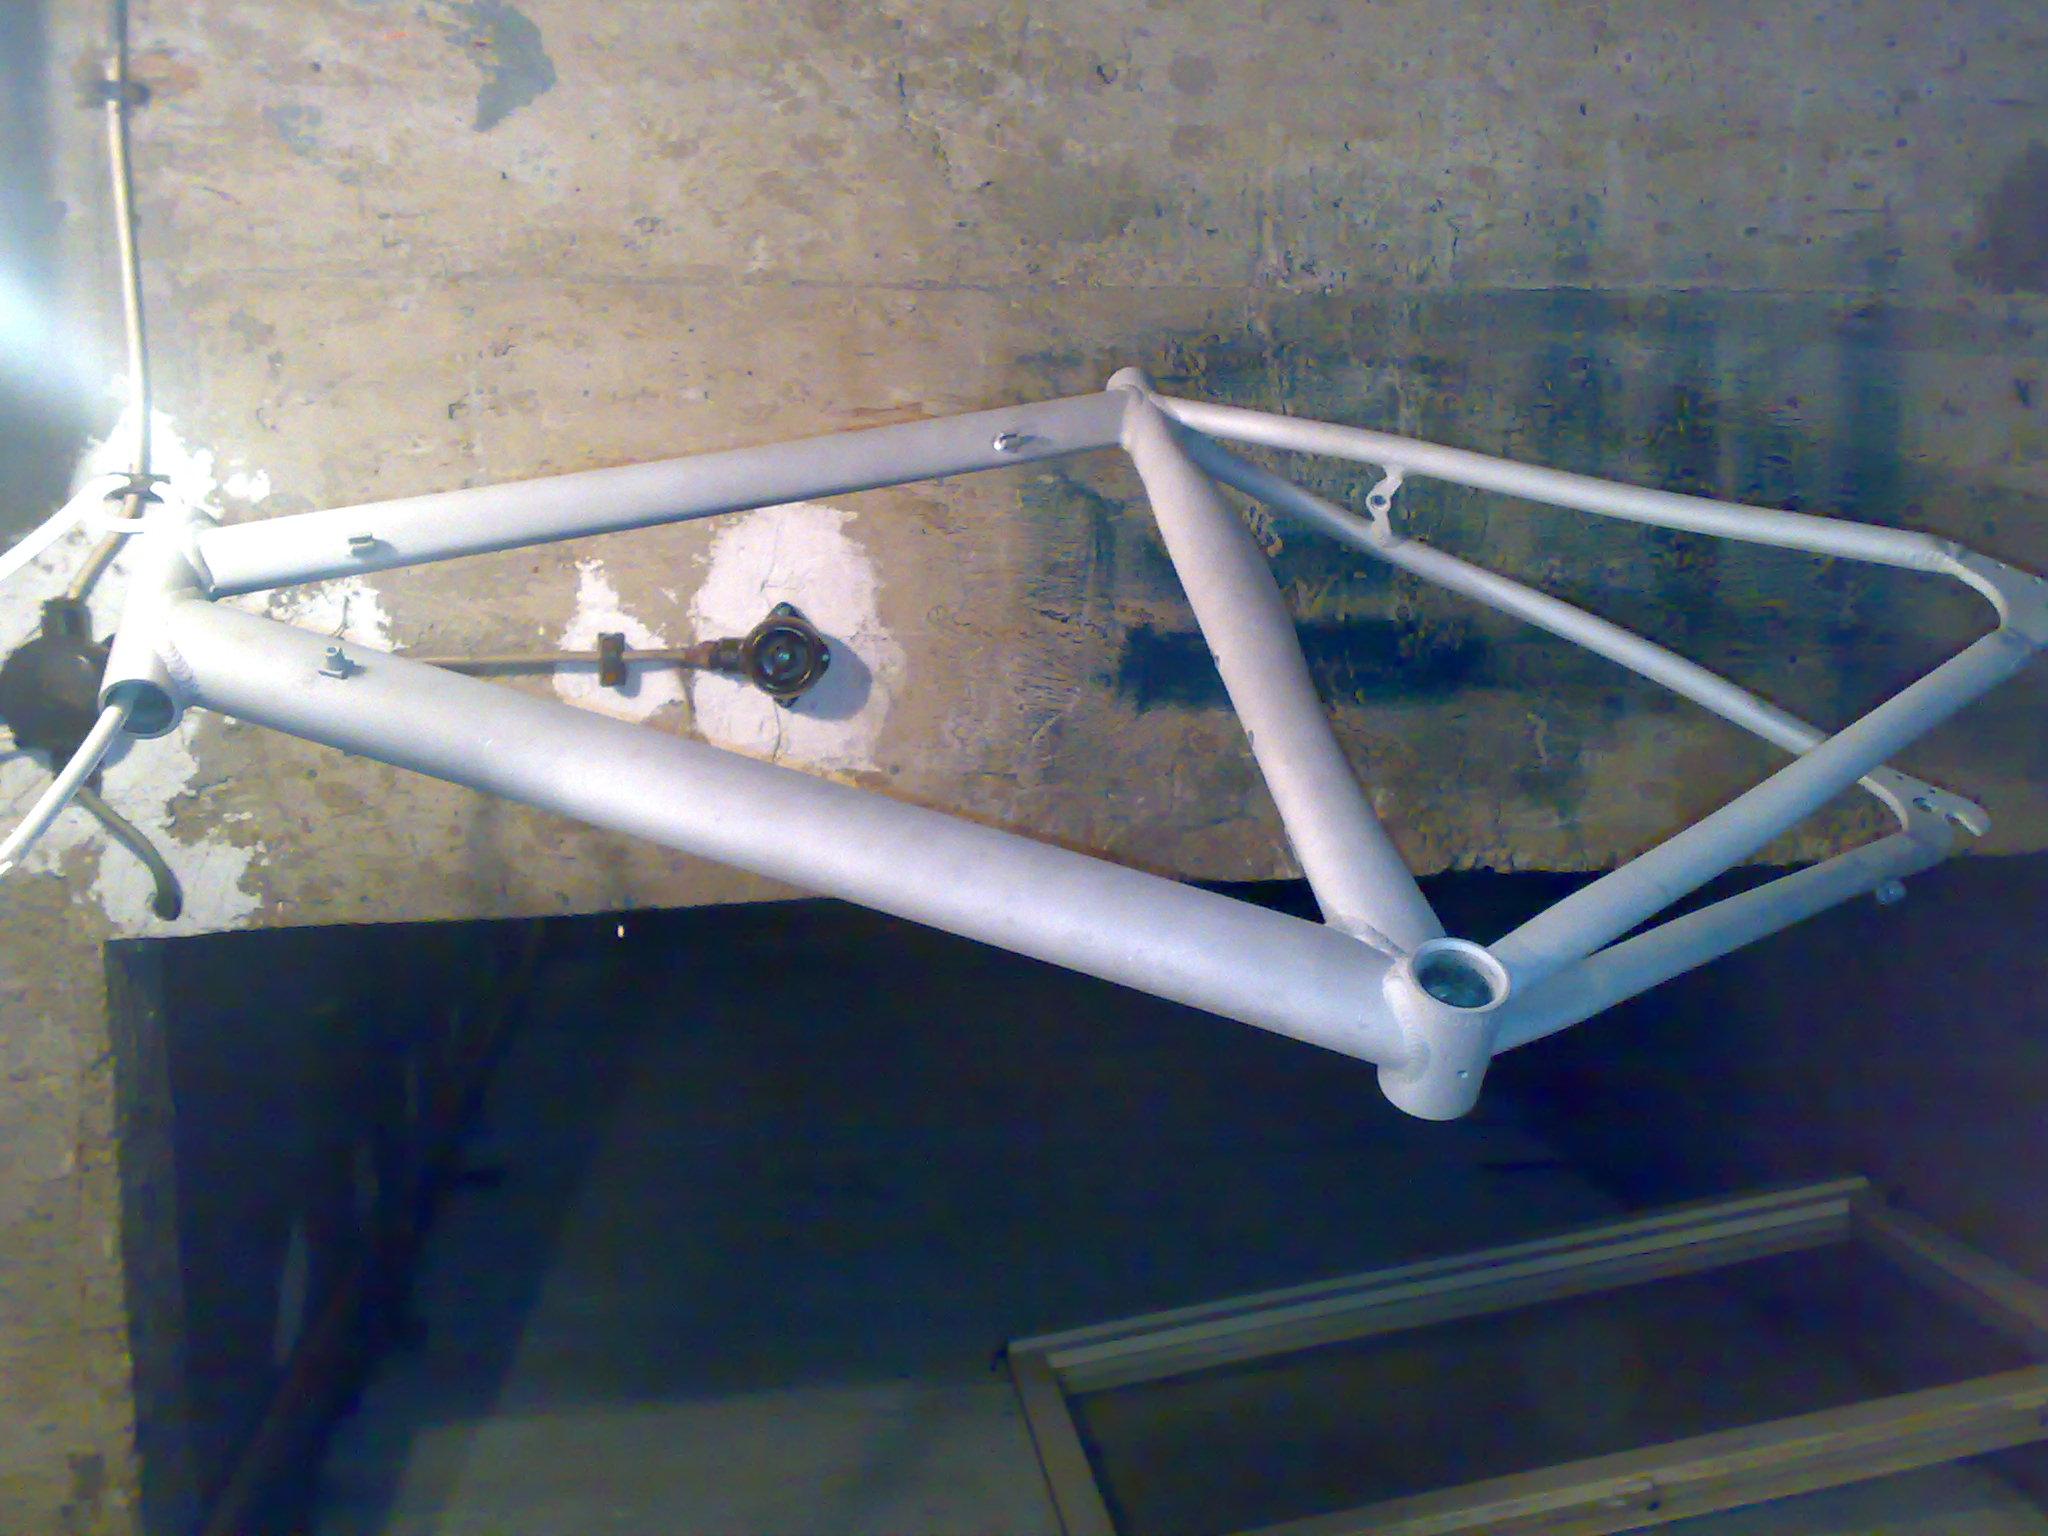 painting aluminum bike frame